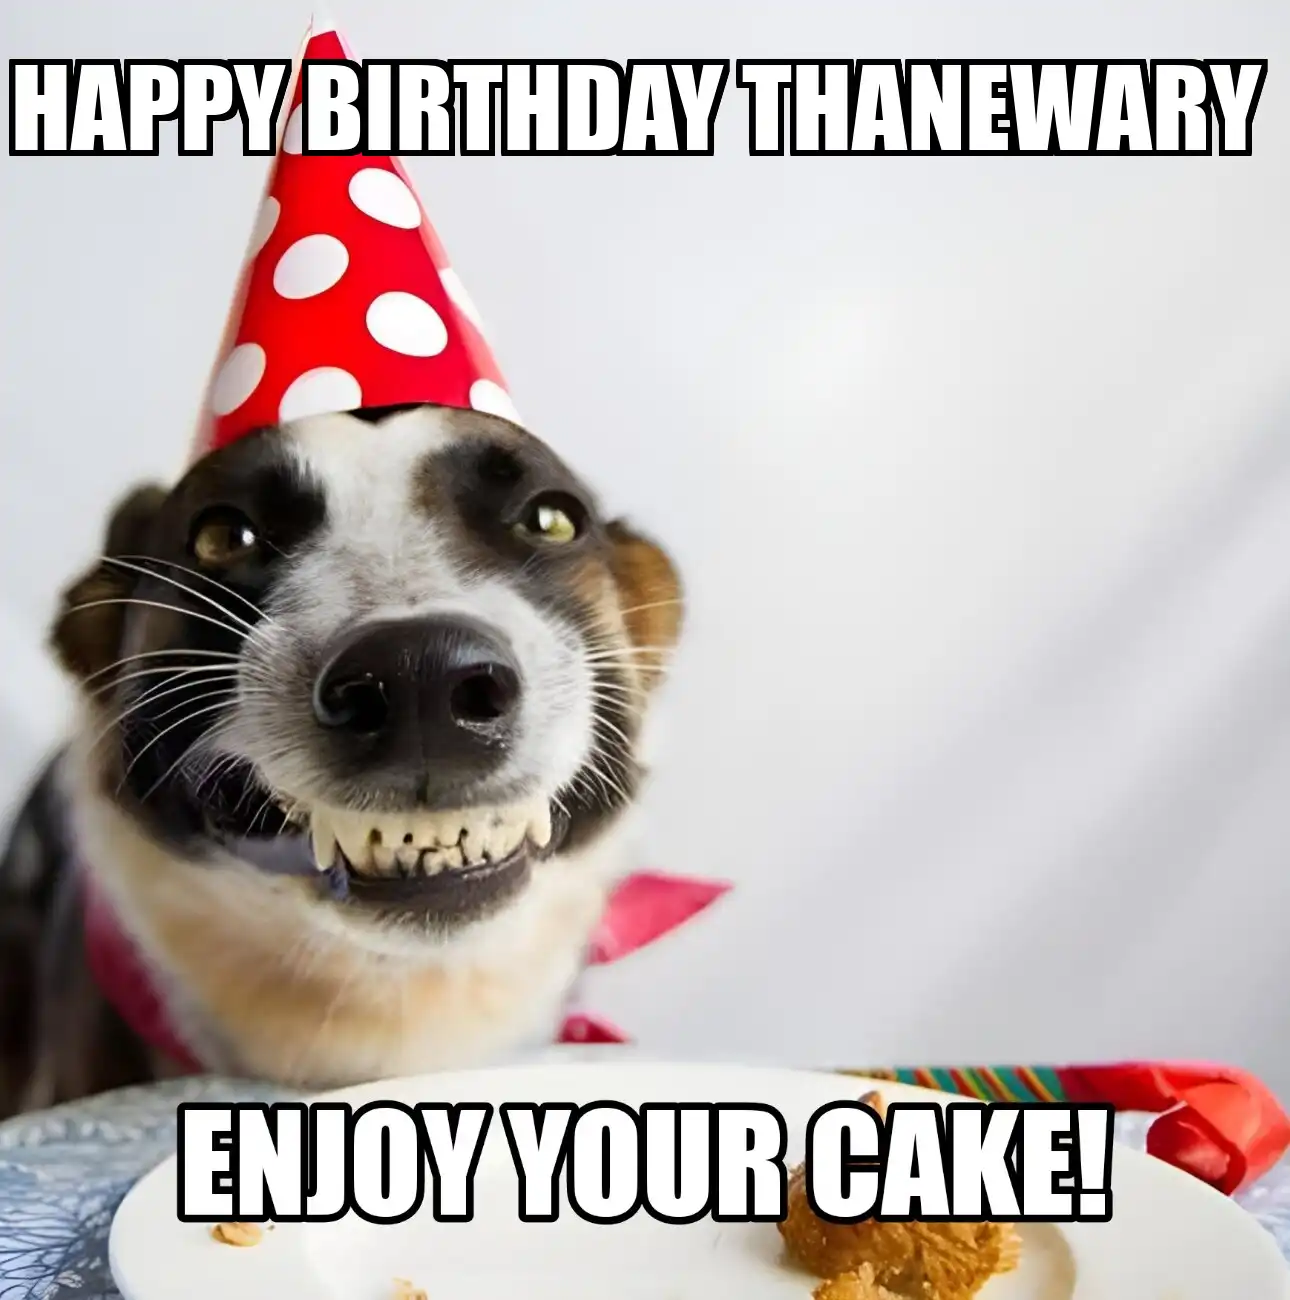 Happy Birthday Thanewary Enjoy Your Cake Dog Meme